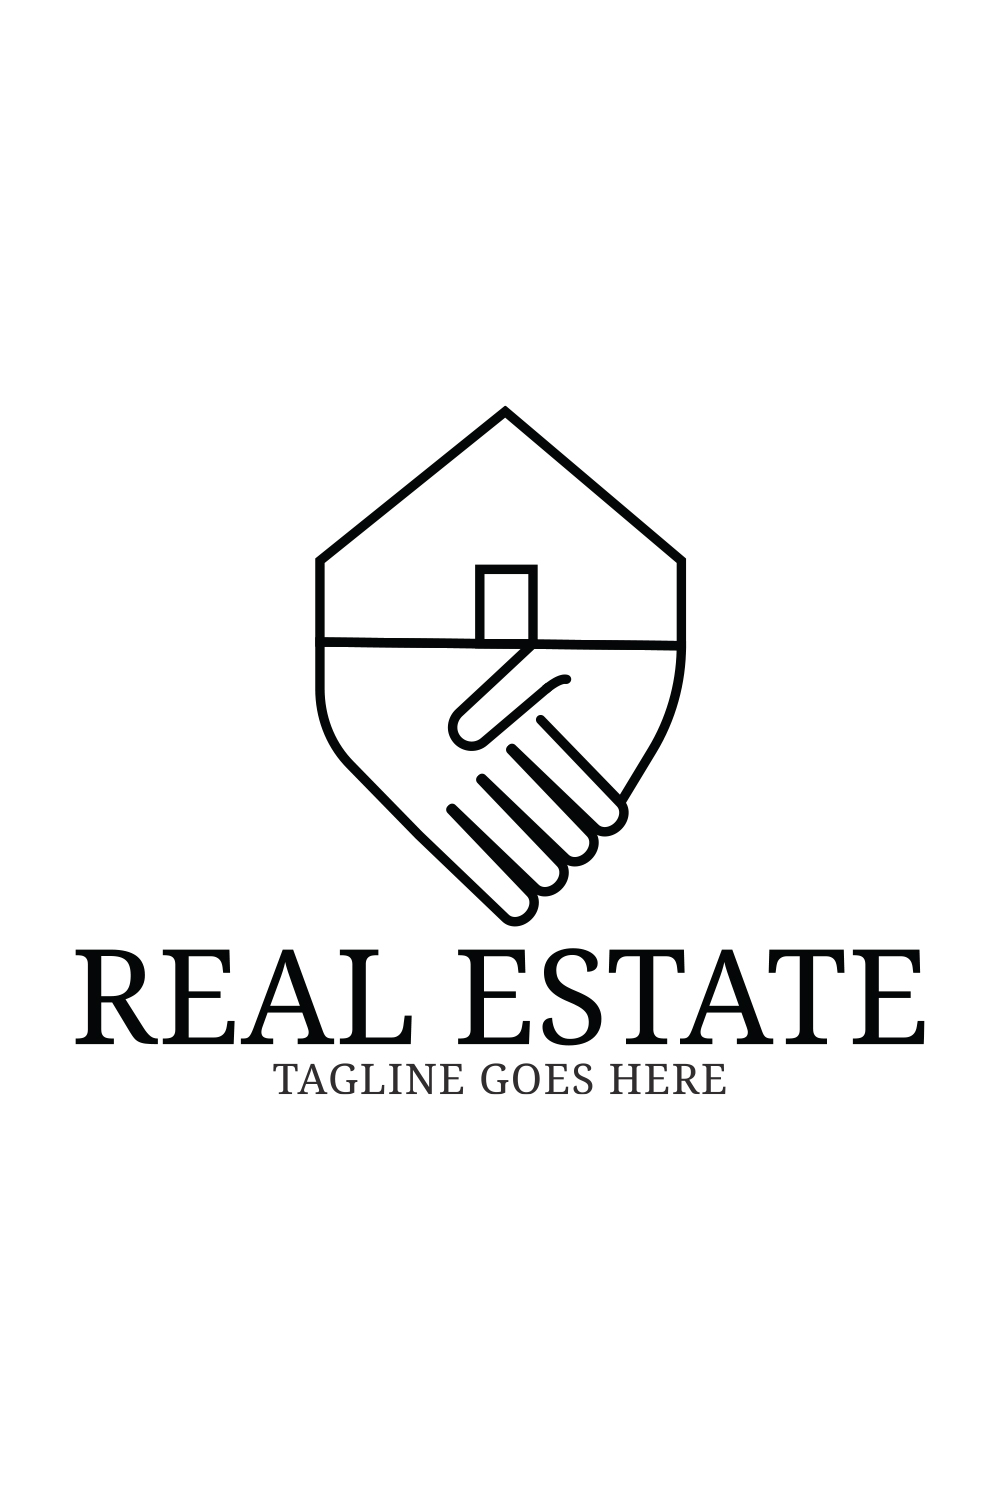 Real Estate logo pinterest preview image.